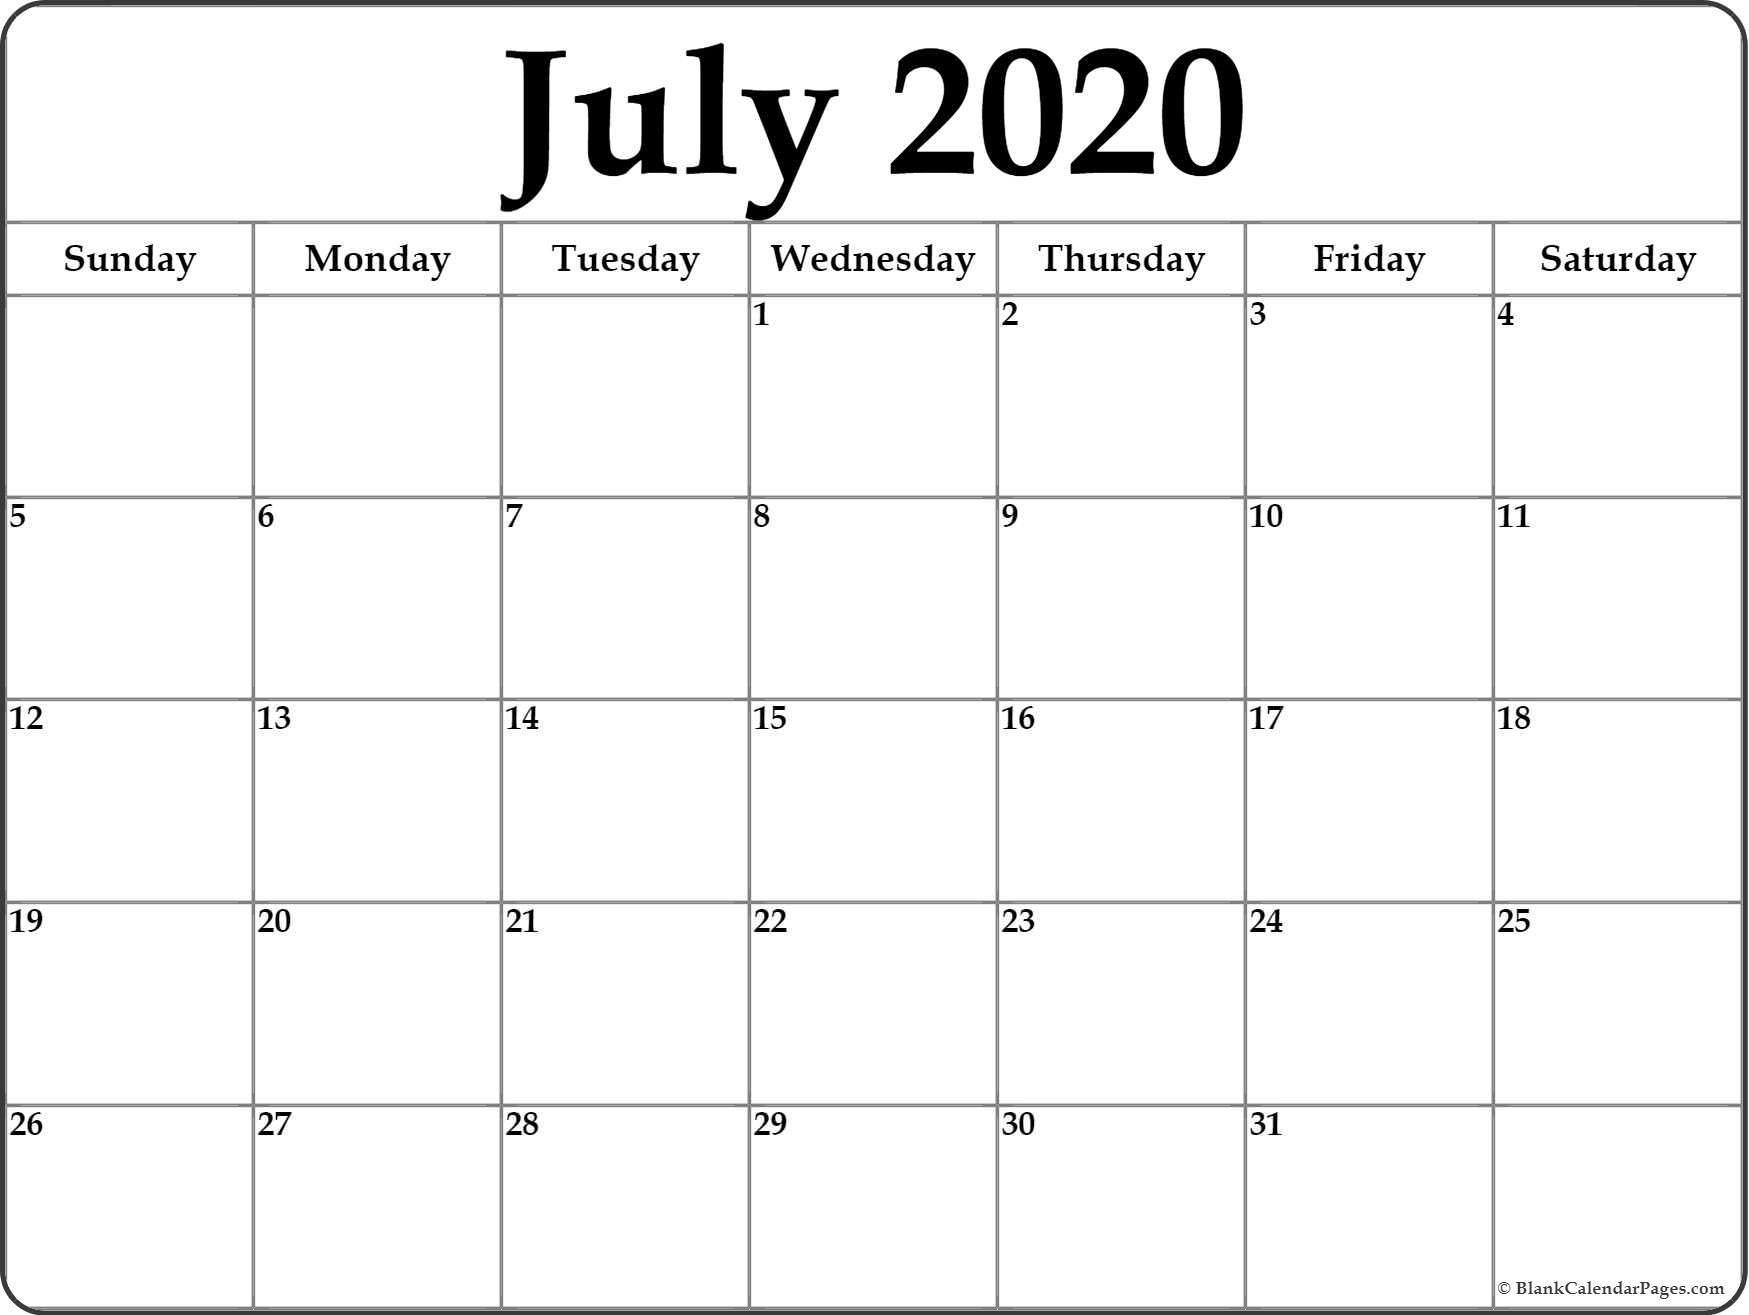 July 2020 Calendar | Free Printable Monthly Calendars-Monthly Calendar July 2020